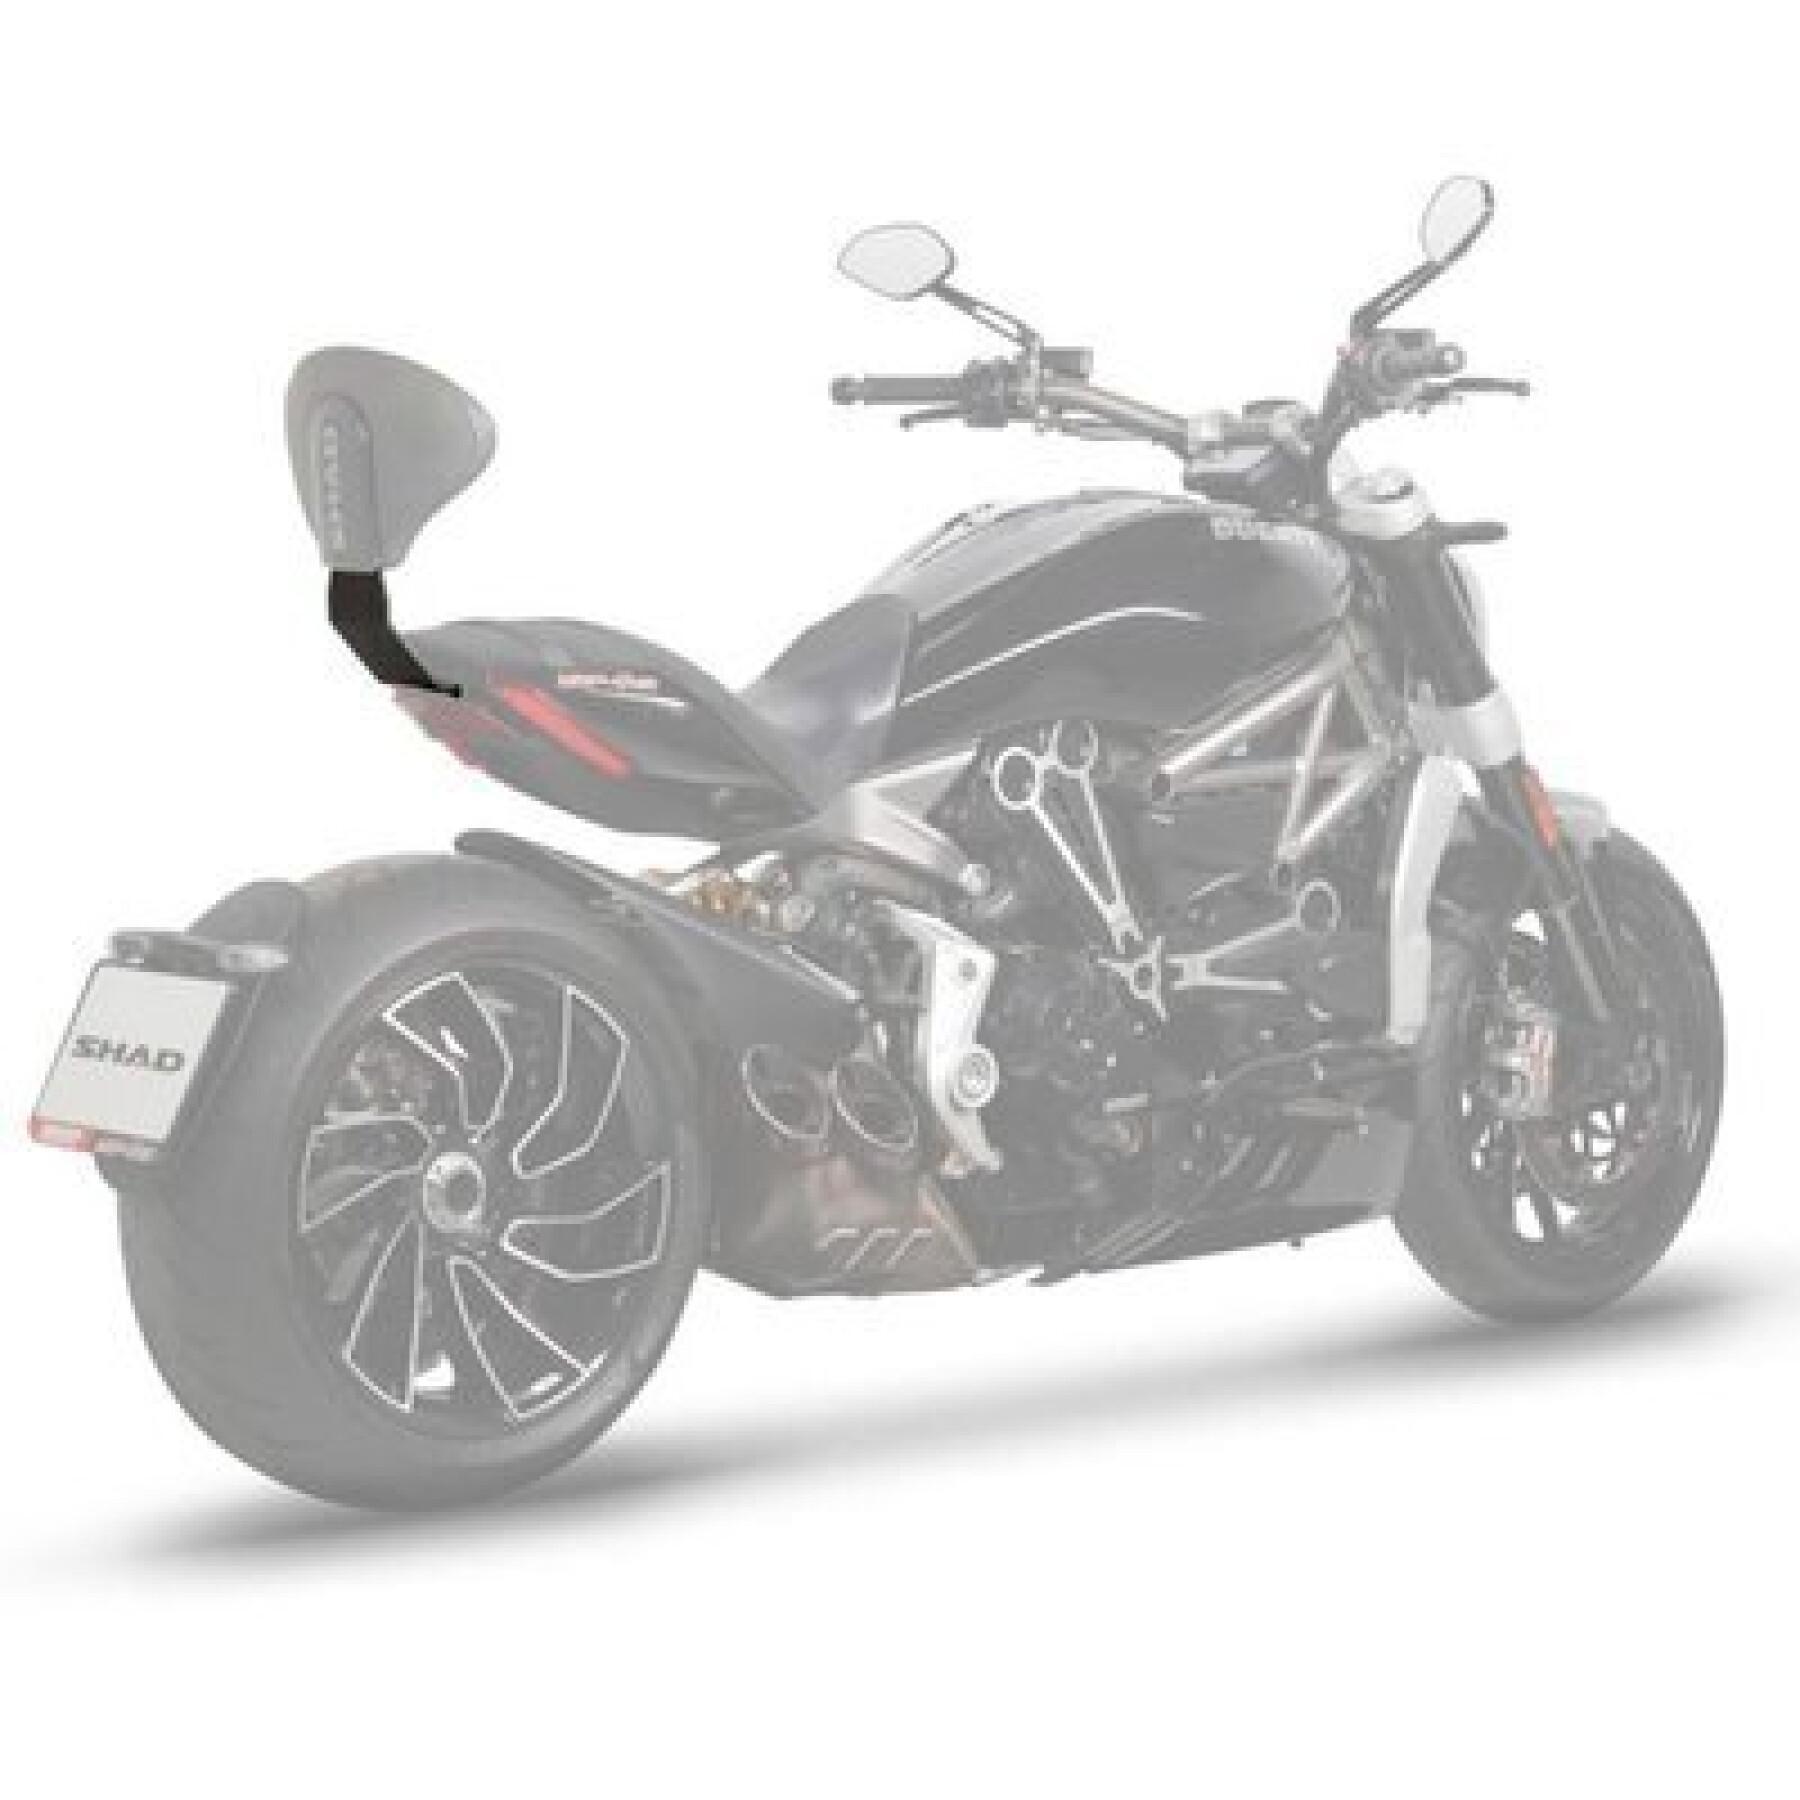 Kit de montaje para respaldo de moto Shad Ducati Diavel 1262